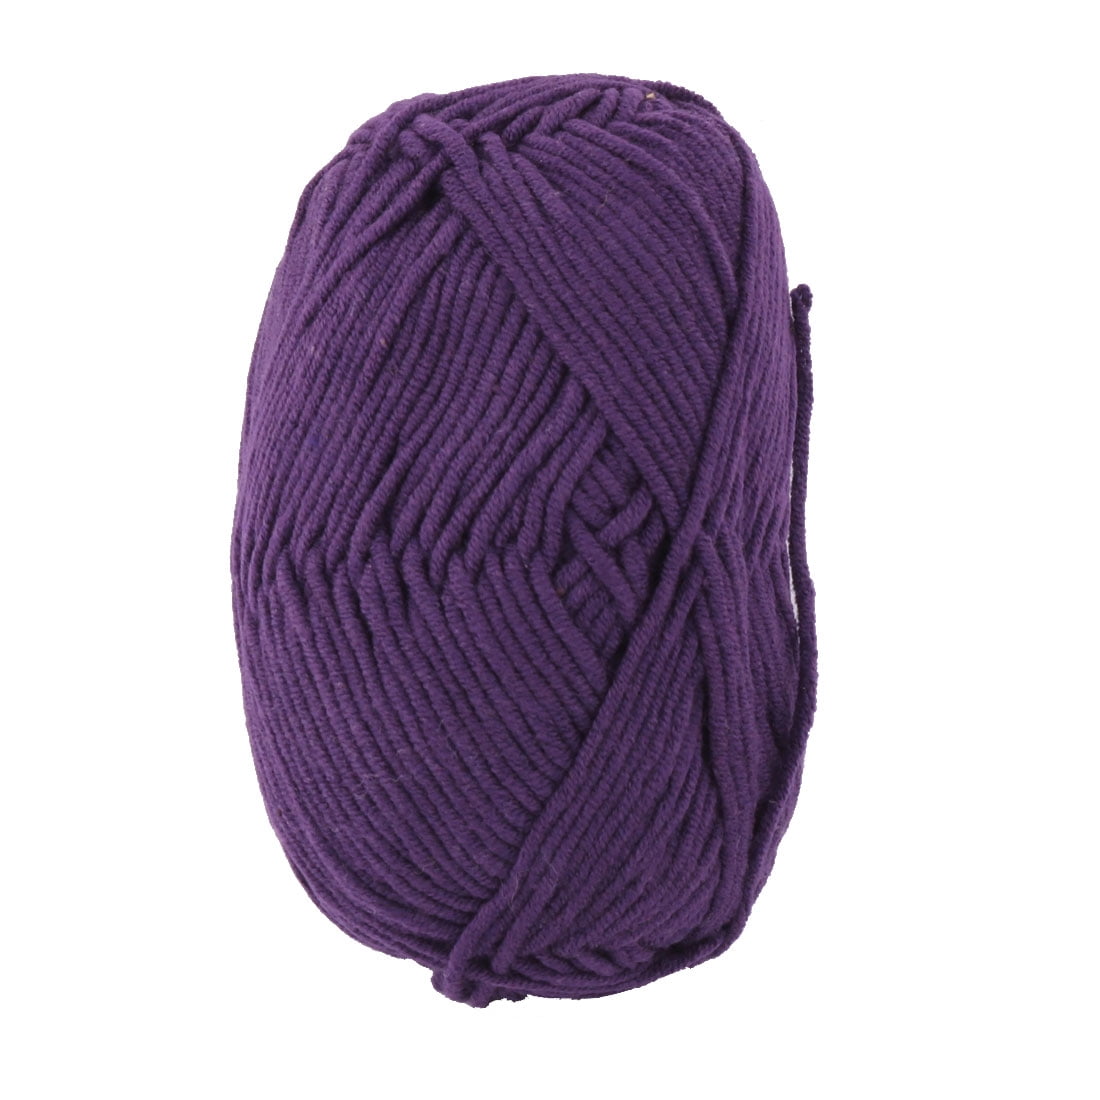 Home DIY Craft Personalized Glove Weaving Crochet Yarn String Cord Navy  Blue 50g